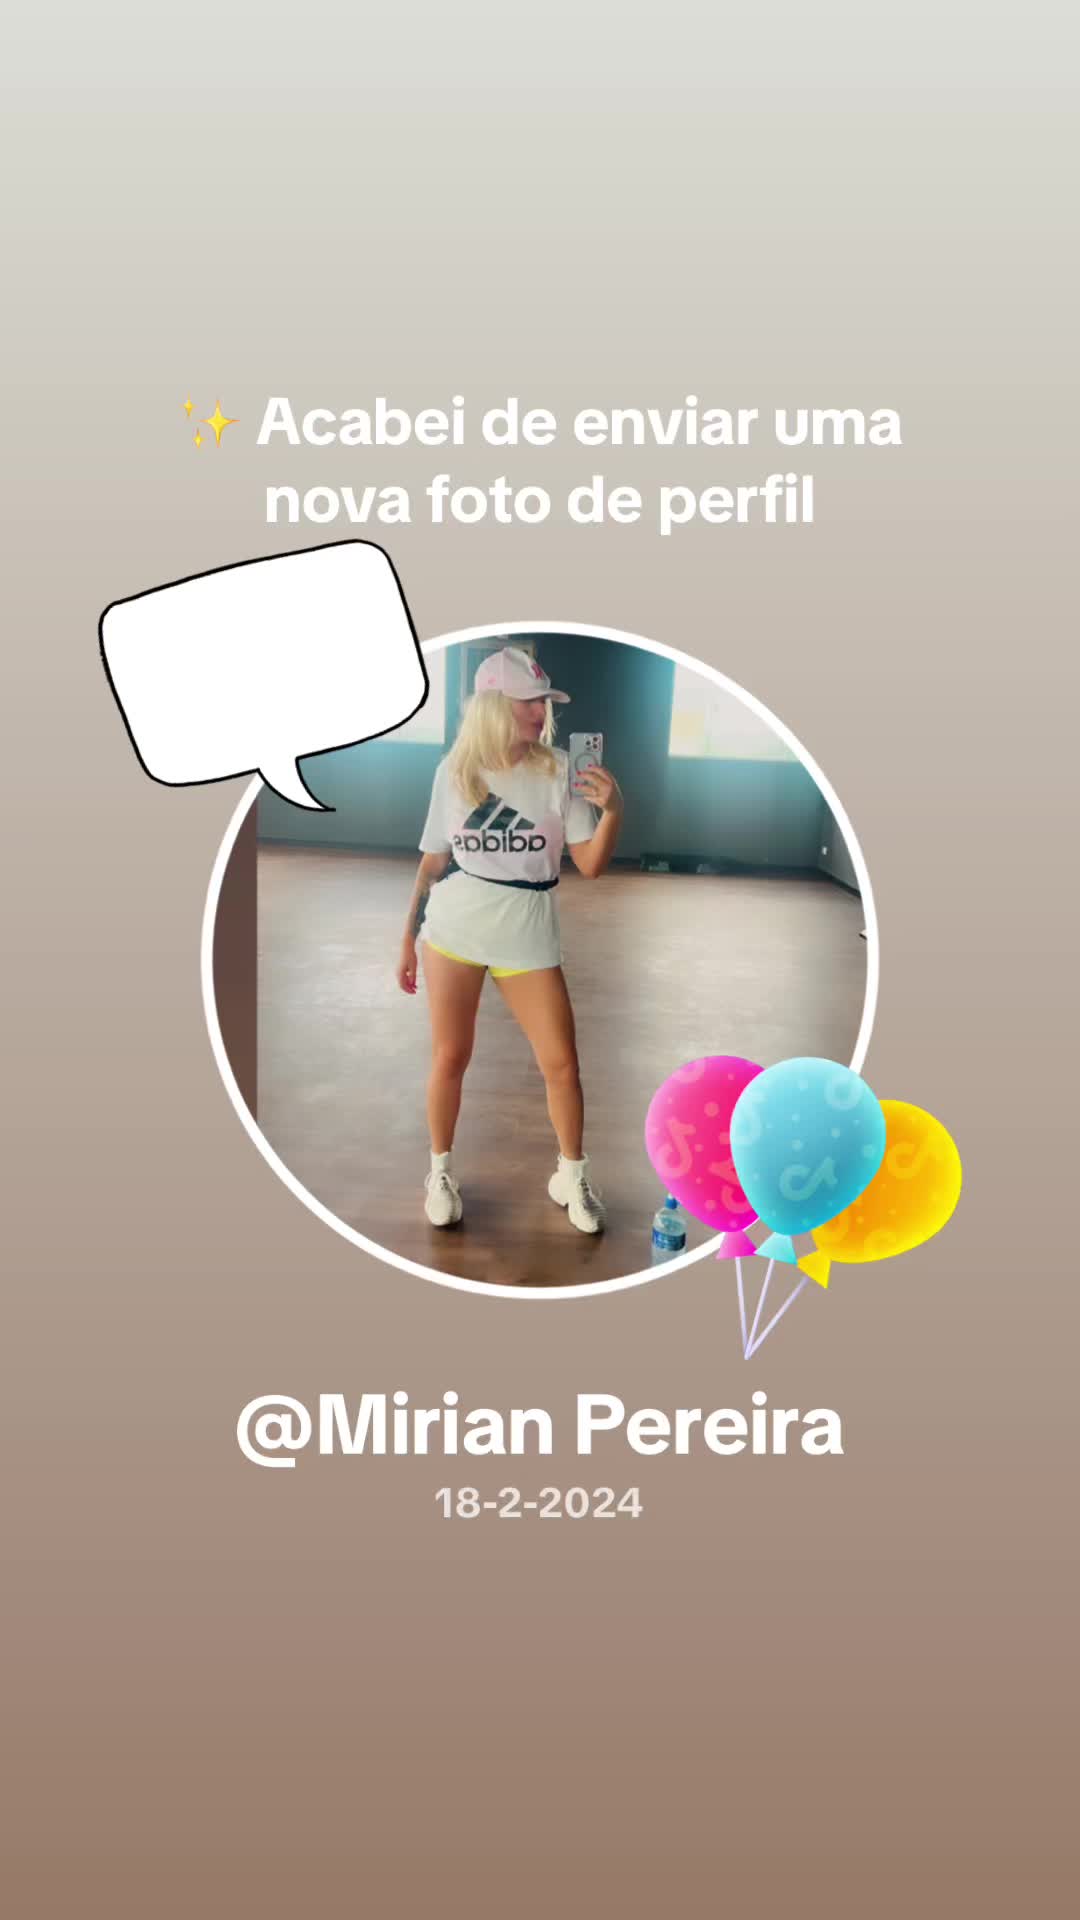 @Mirian Pereira